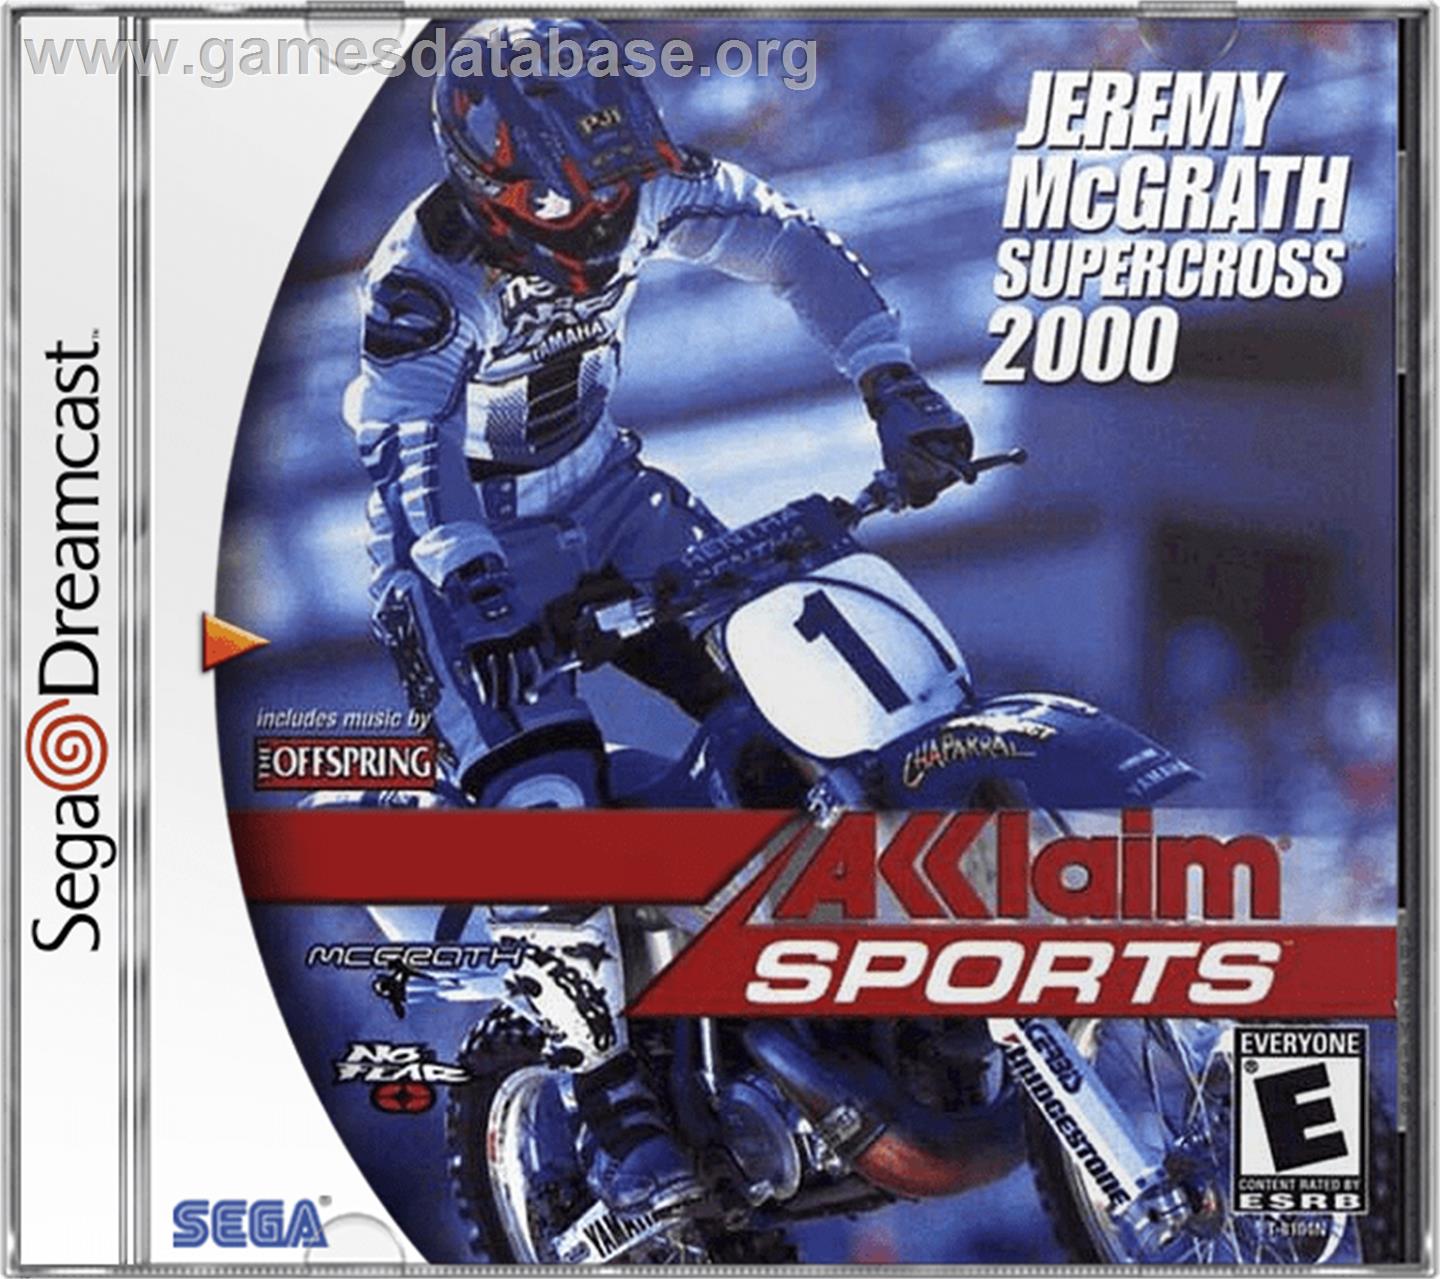 Jeremy McGrath Supercross 2000 - Sega Dreamcast - Artwork - Box